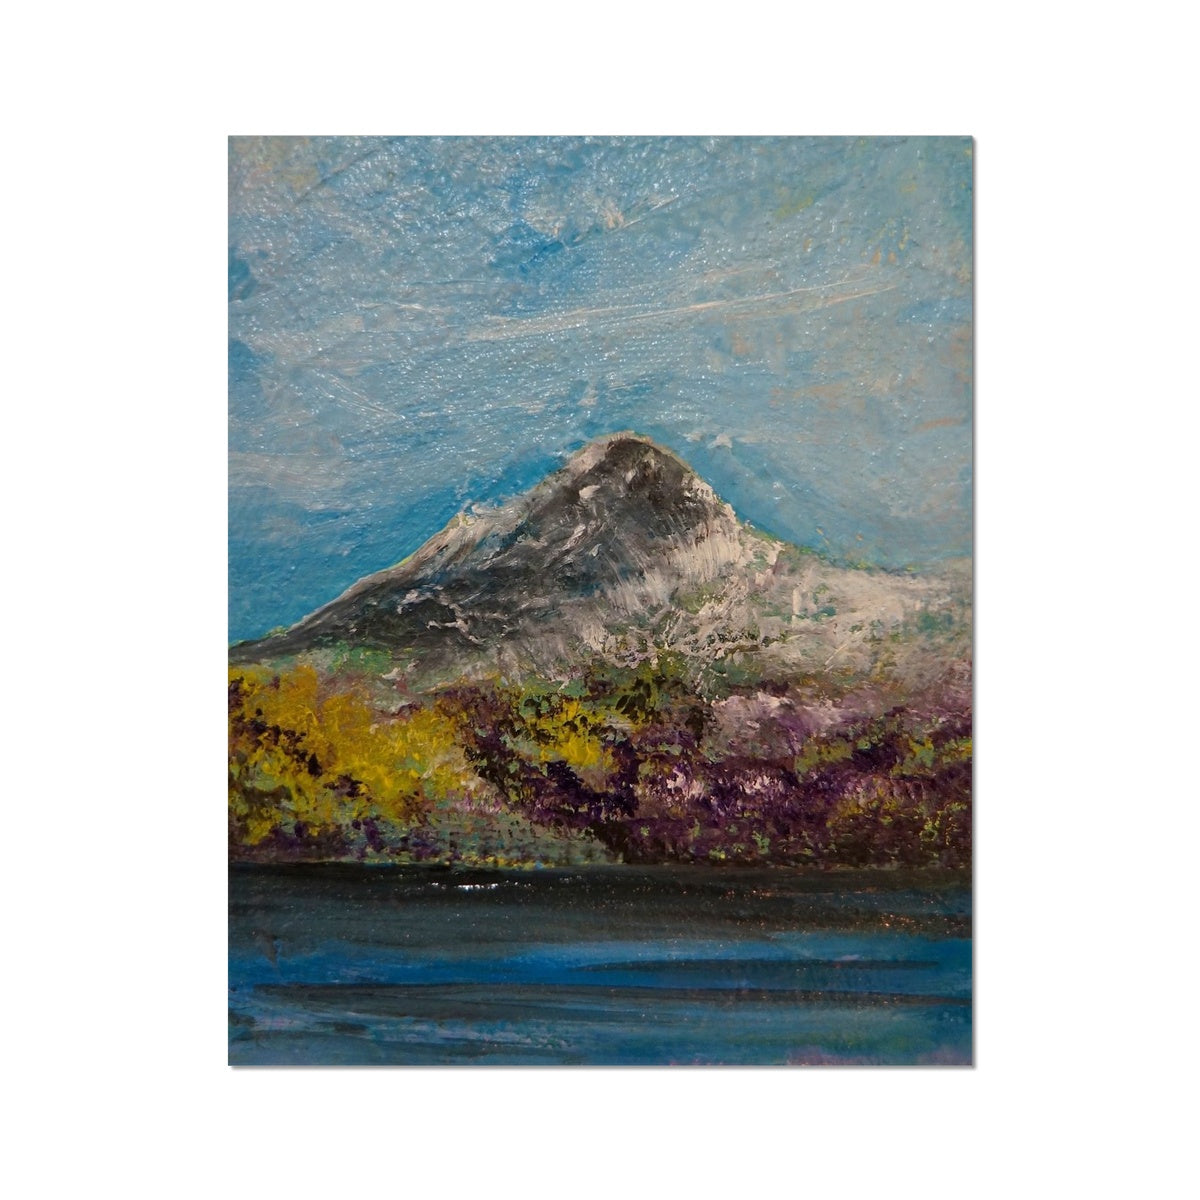 Ben Lomond ii Painting | Hahnemühle German Etching Prints From Scotland-Fine art-Scottish Lochs & Mountains Art Gallery-16"x20"-Paintings, Prints, Homeware, Art Gifts From Scotland By Scottish Artist Kevin Hunter